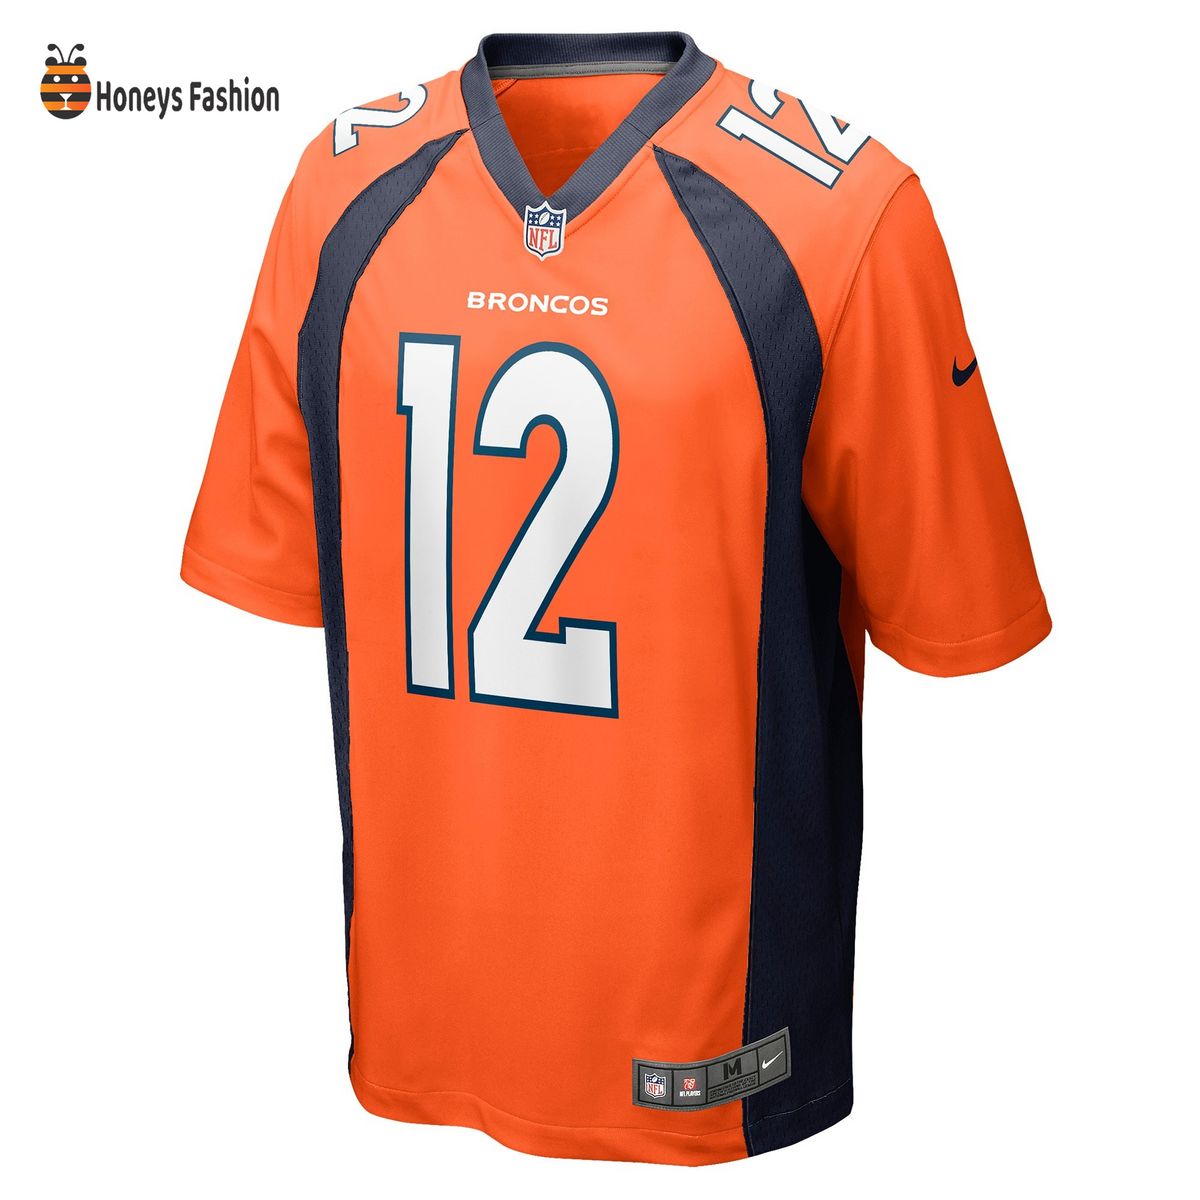 Mike Ford Denver Broncos Nike Game Player Orange Jersey